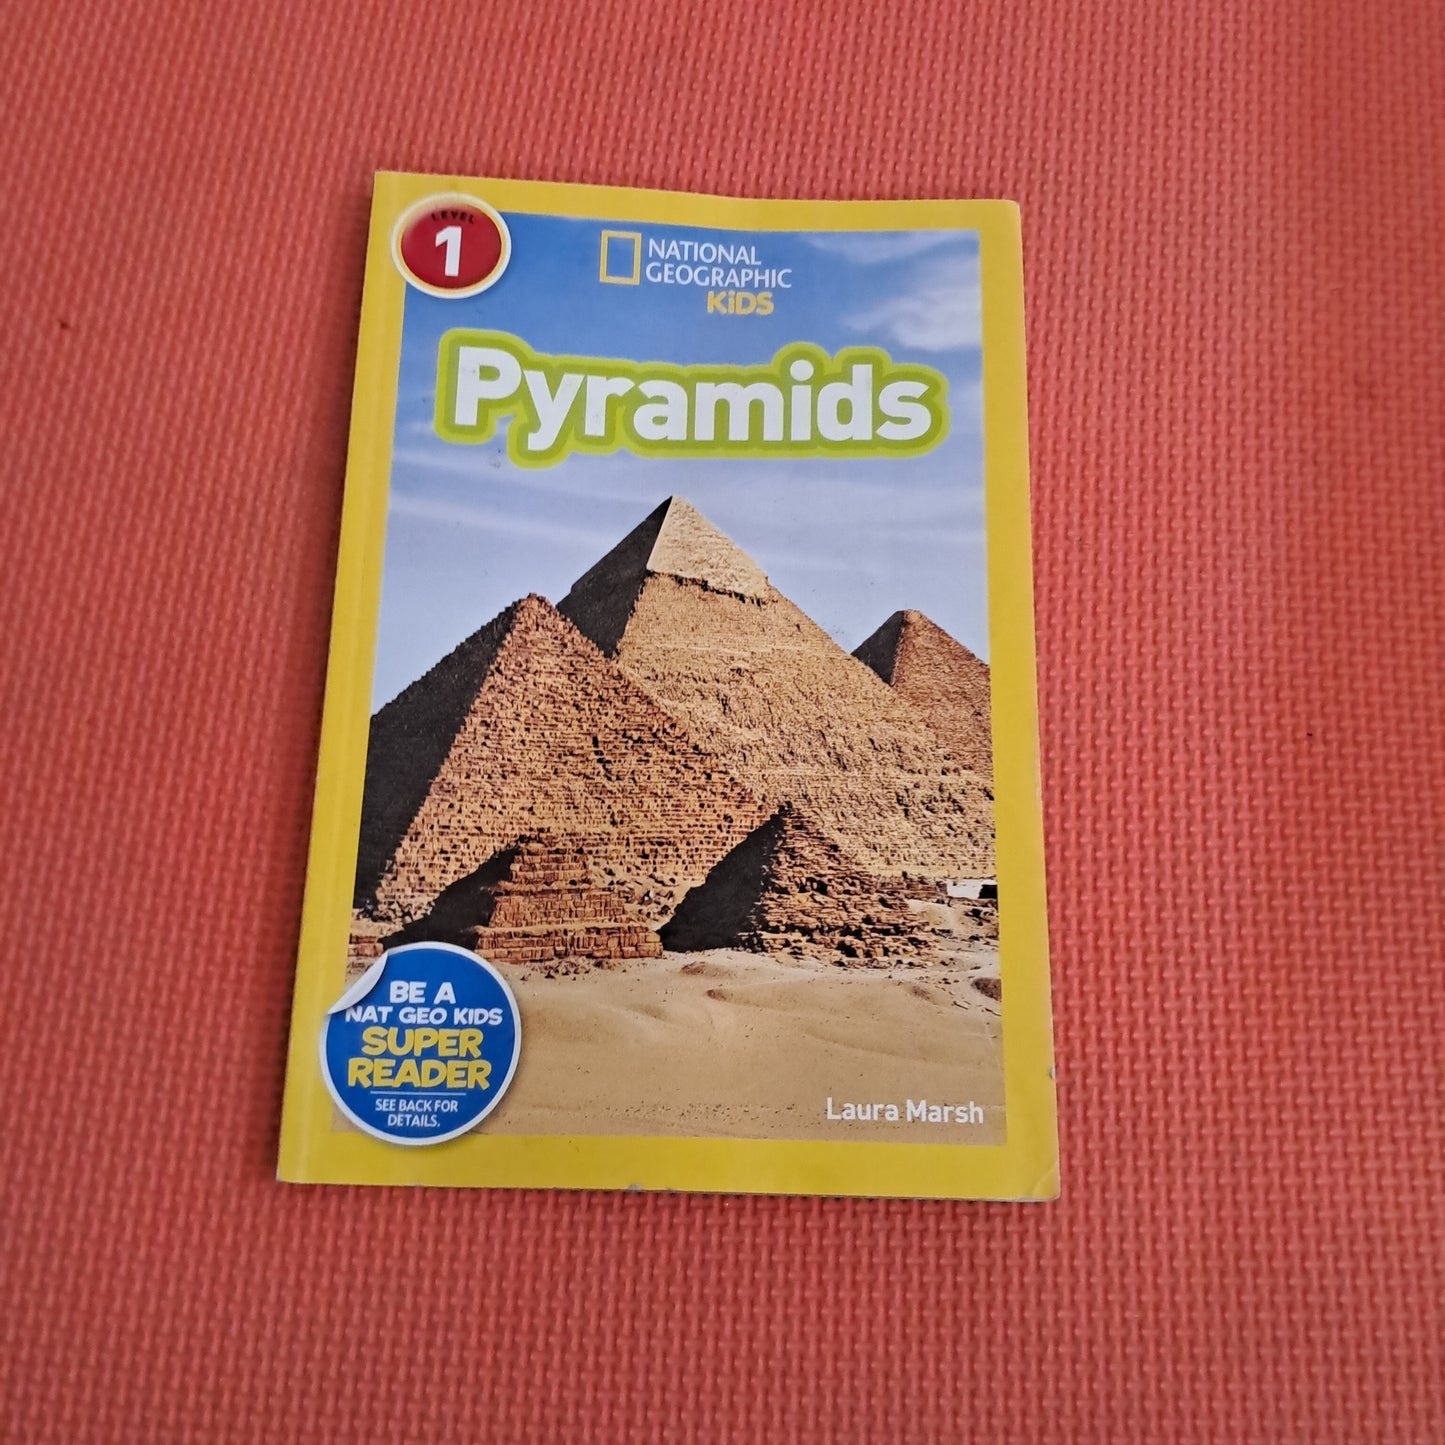 NATIONAL GEOGRAPHIC KIDS Pyramids